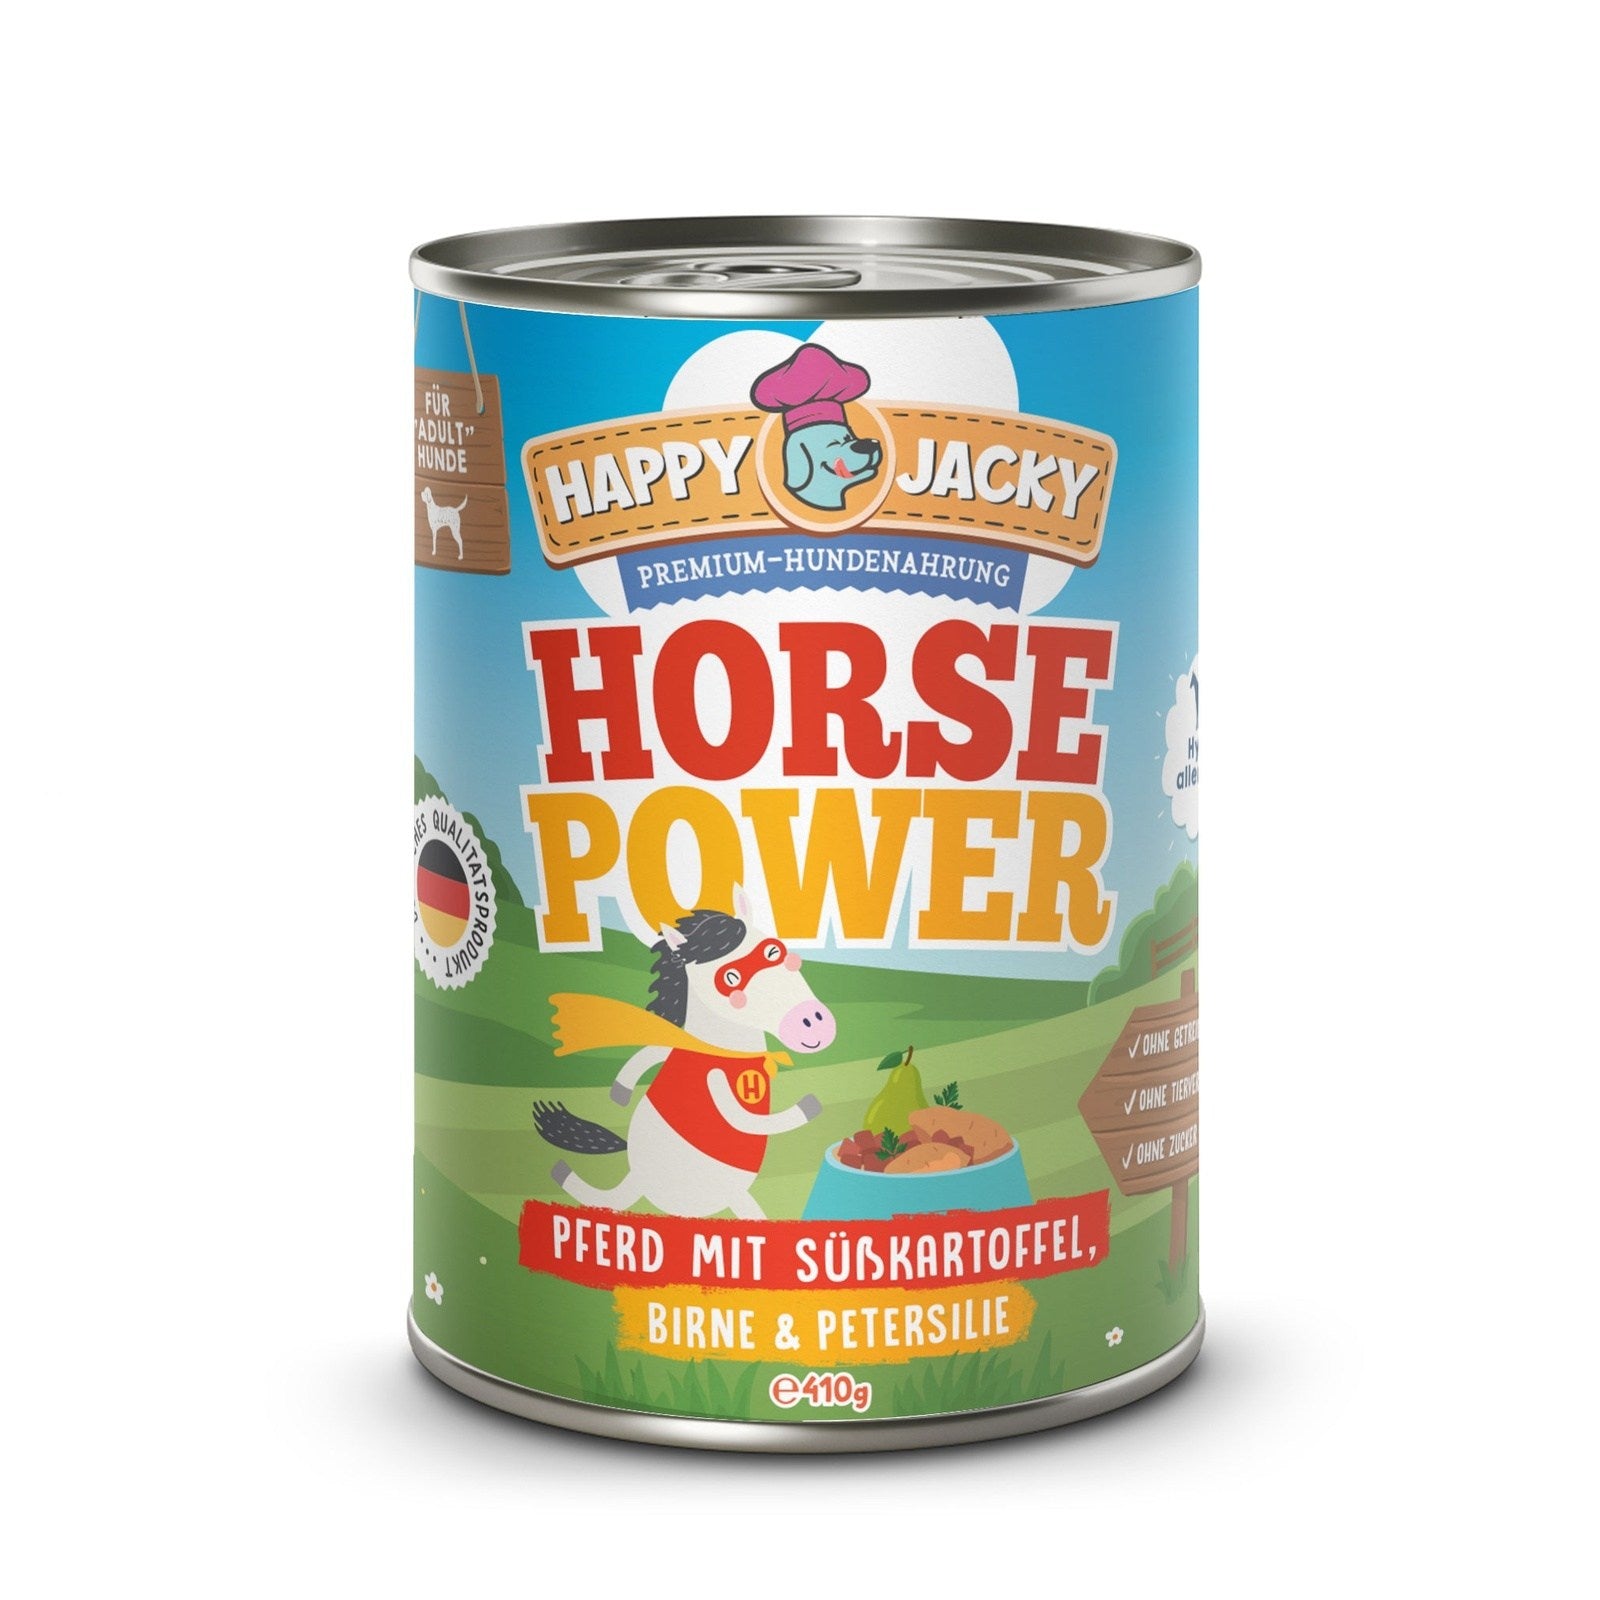 Horse Power - Pferd mit Süßkartoffel, Birne & Petersilie HAPPY JACKY